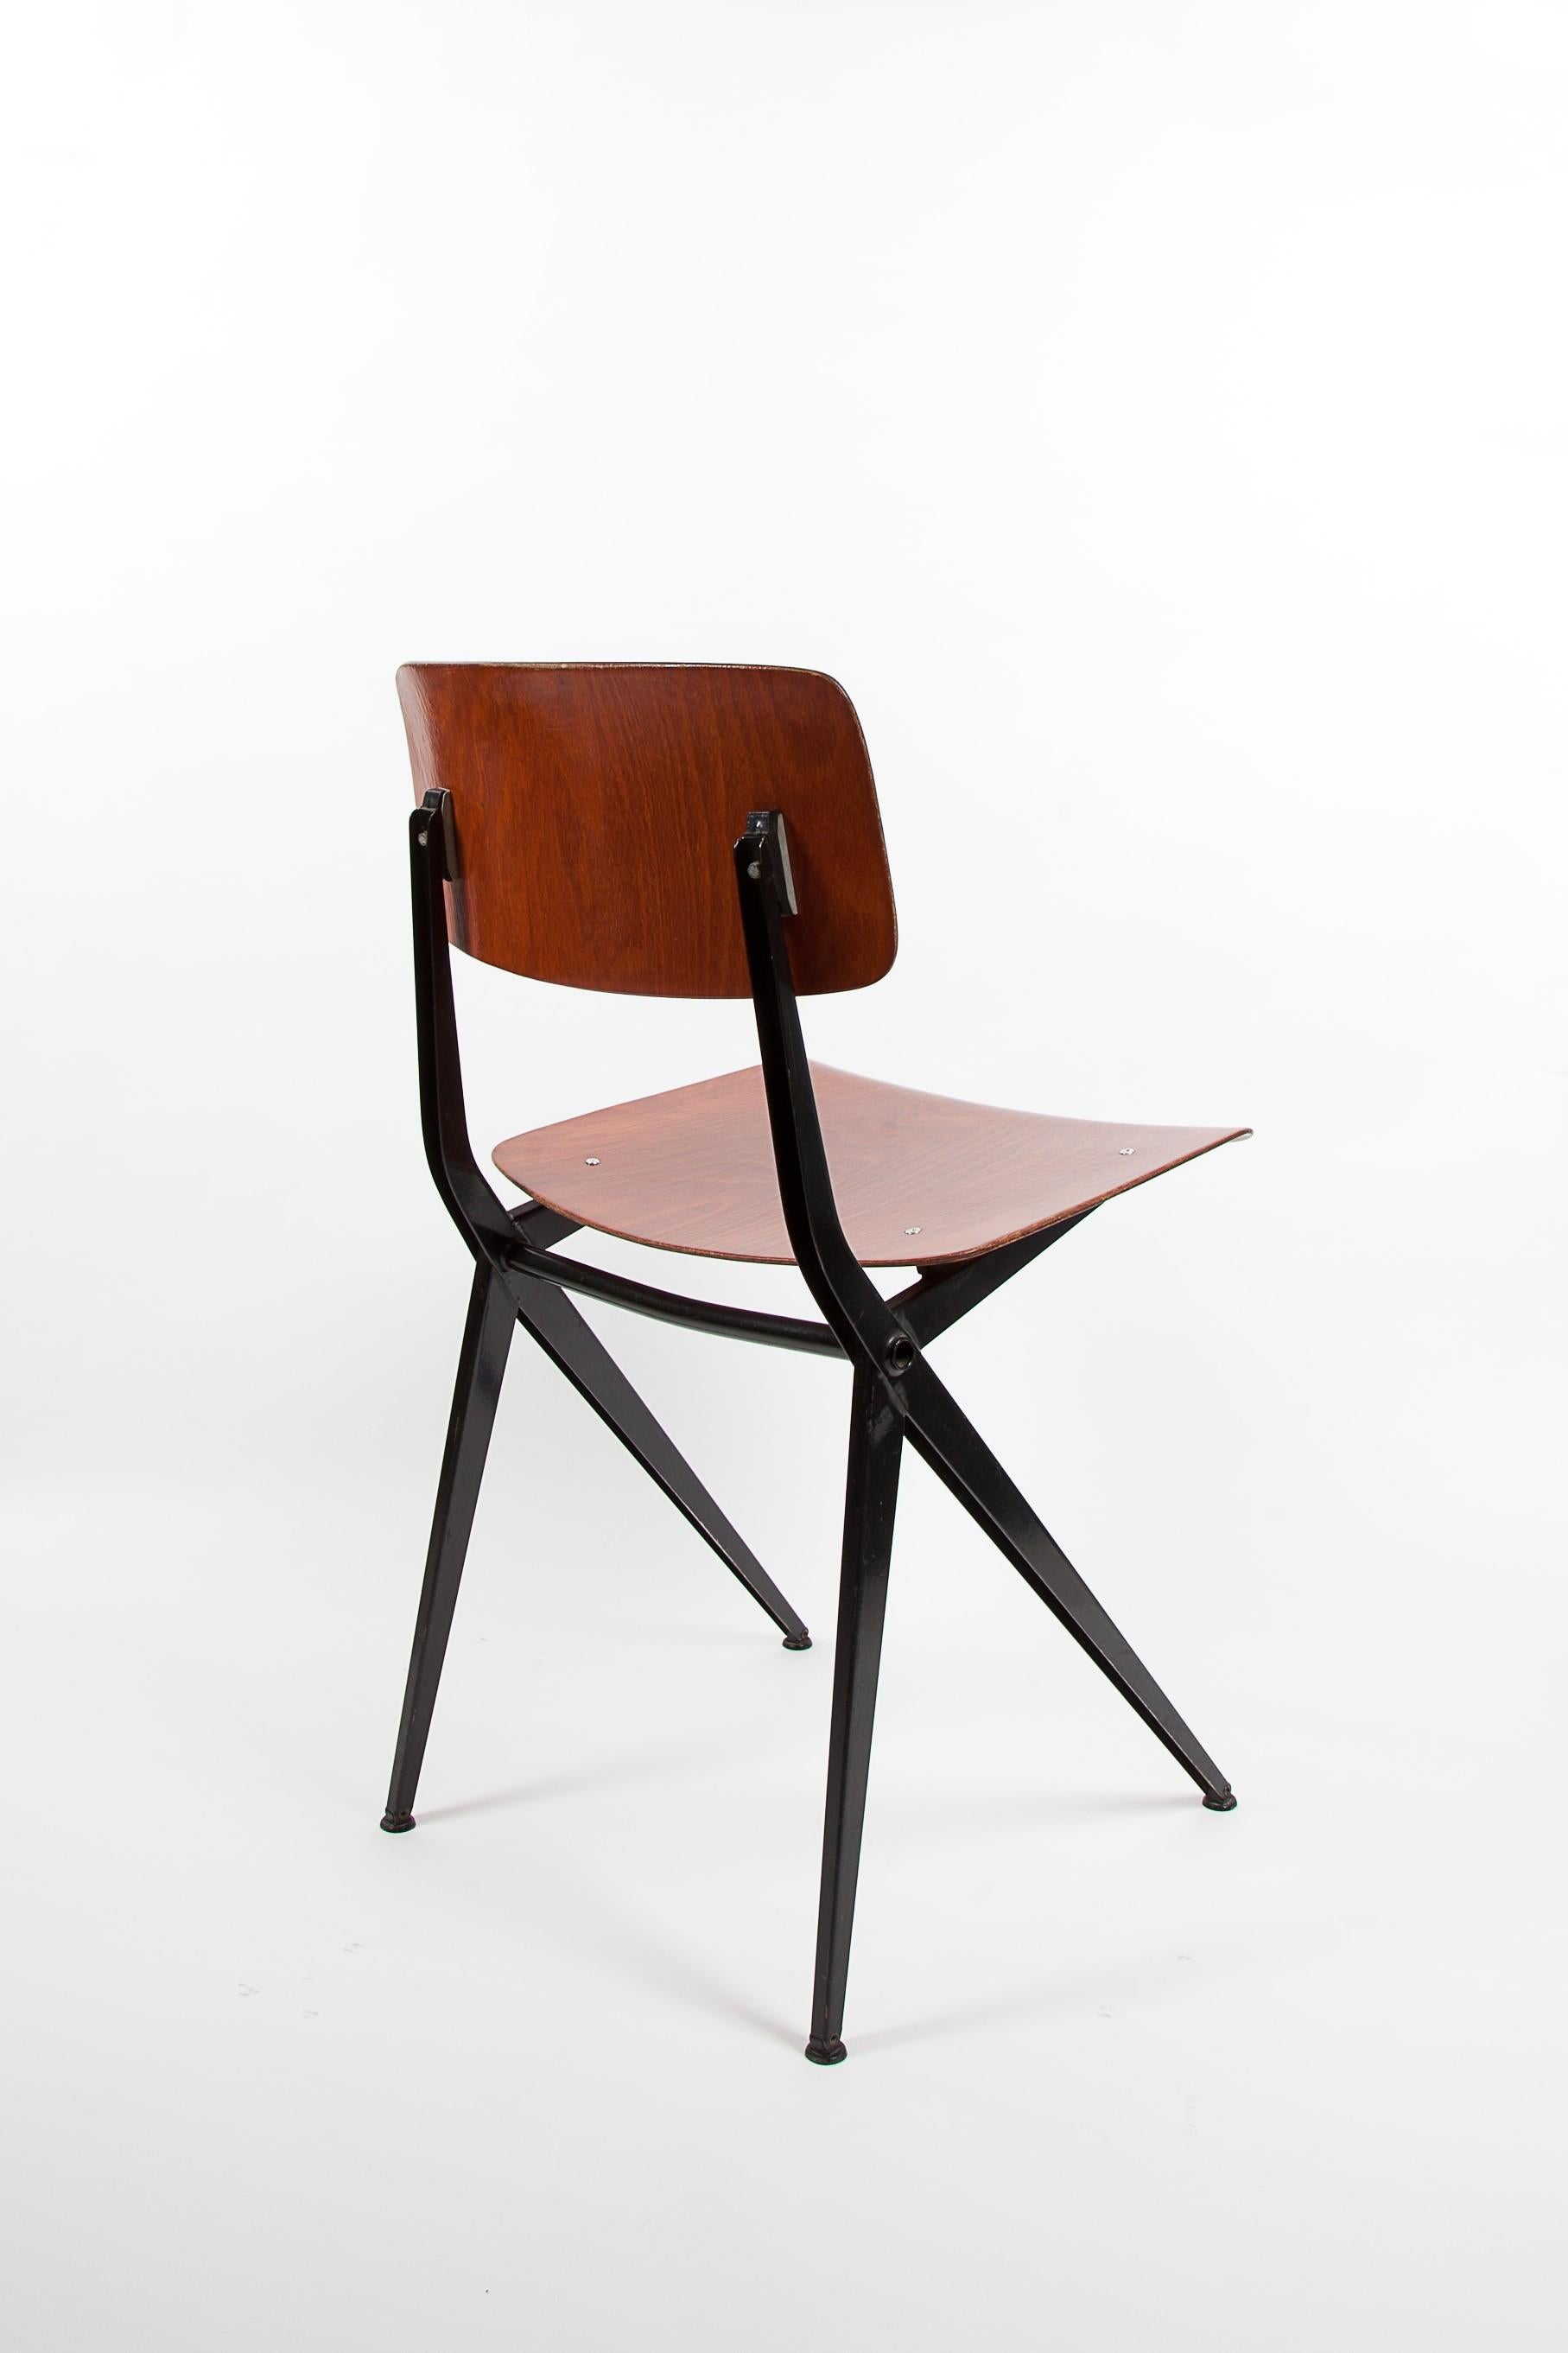 1 of 32 Dutch Marko Industrial Friso Kramer Design Dining Chairs Compass 1950 4